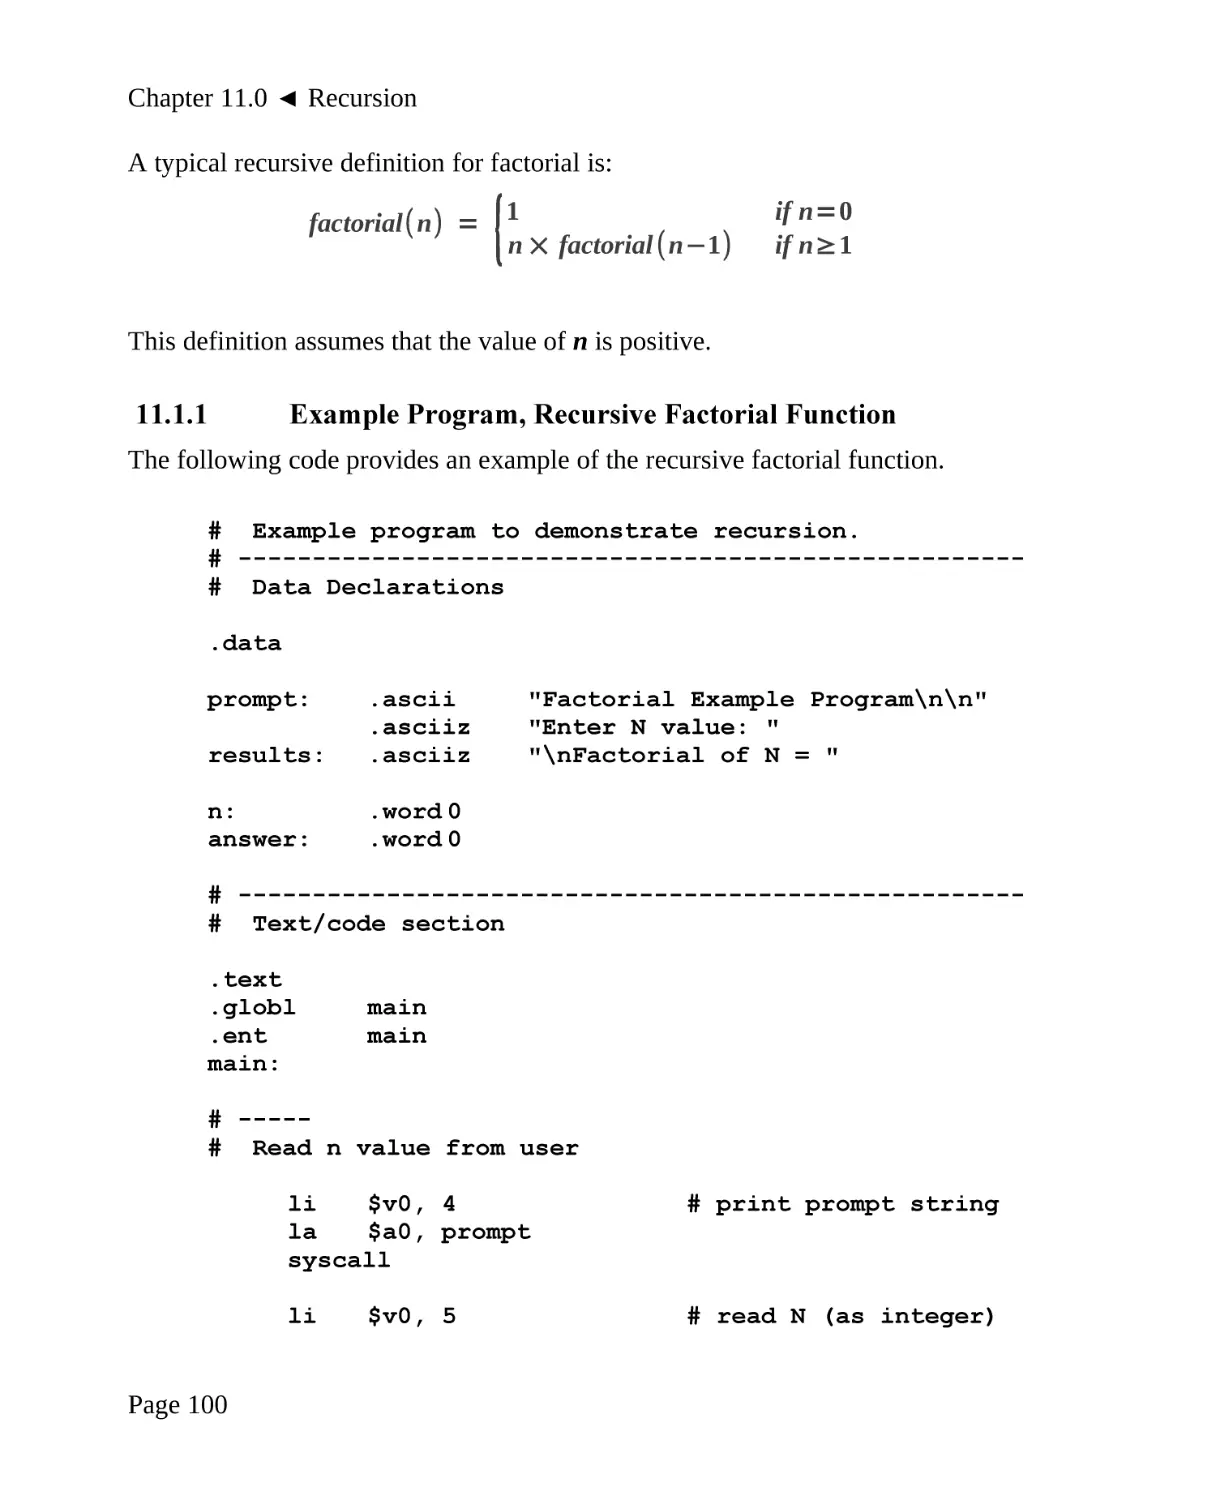 11.1.1 Example Program, Recursive Factorial Function